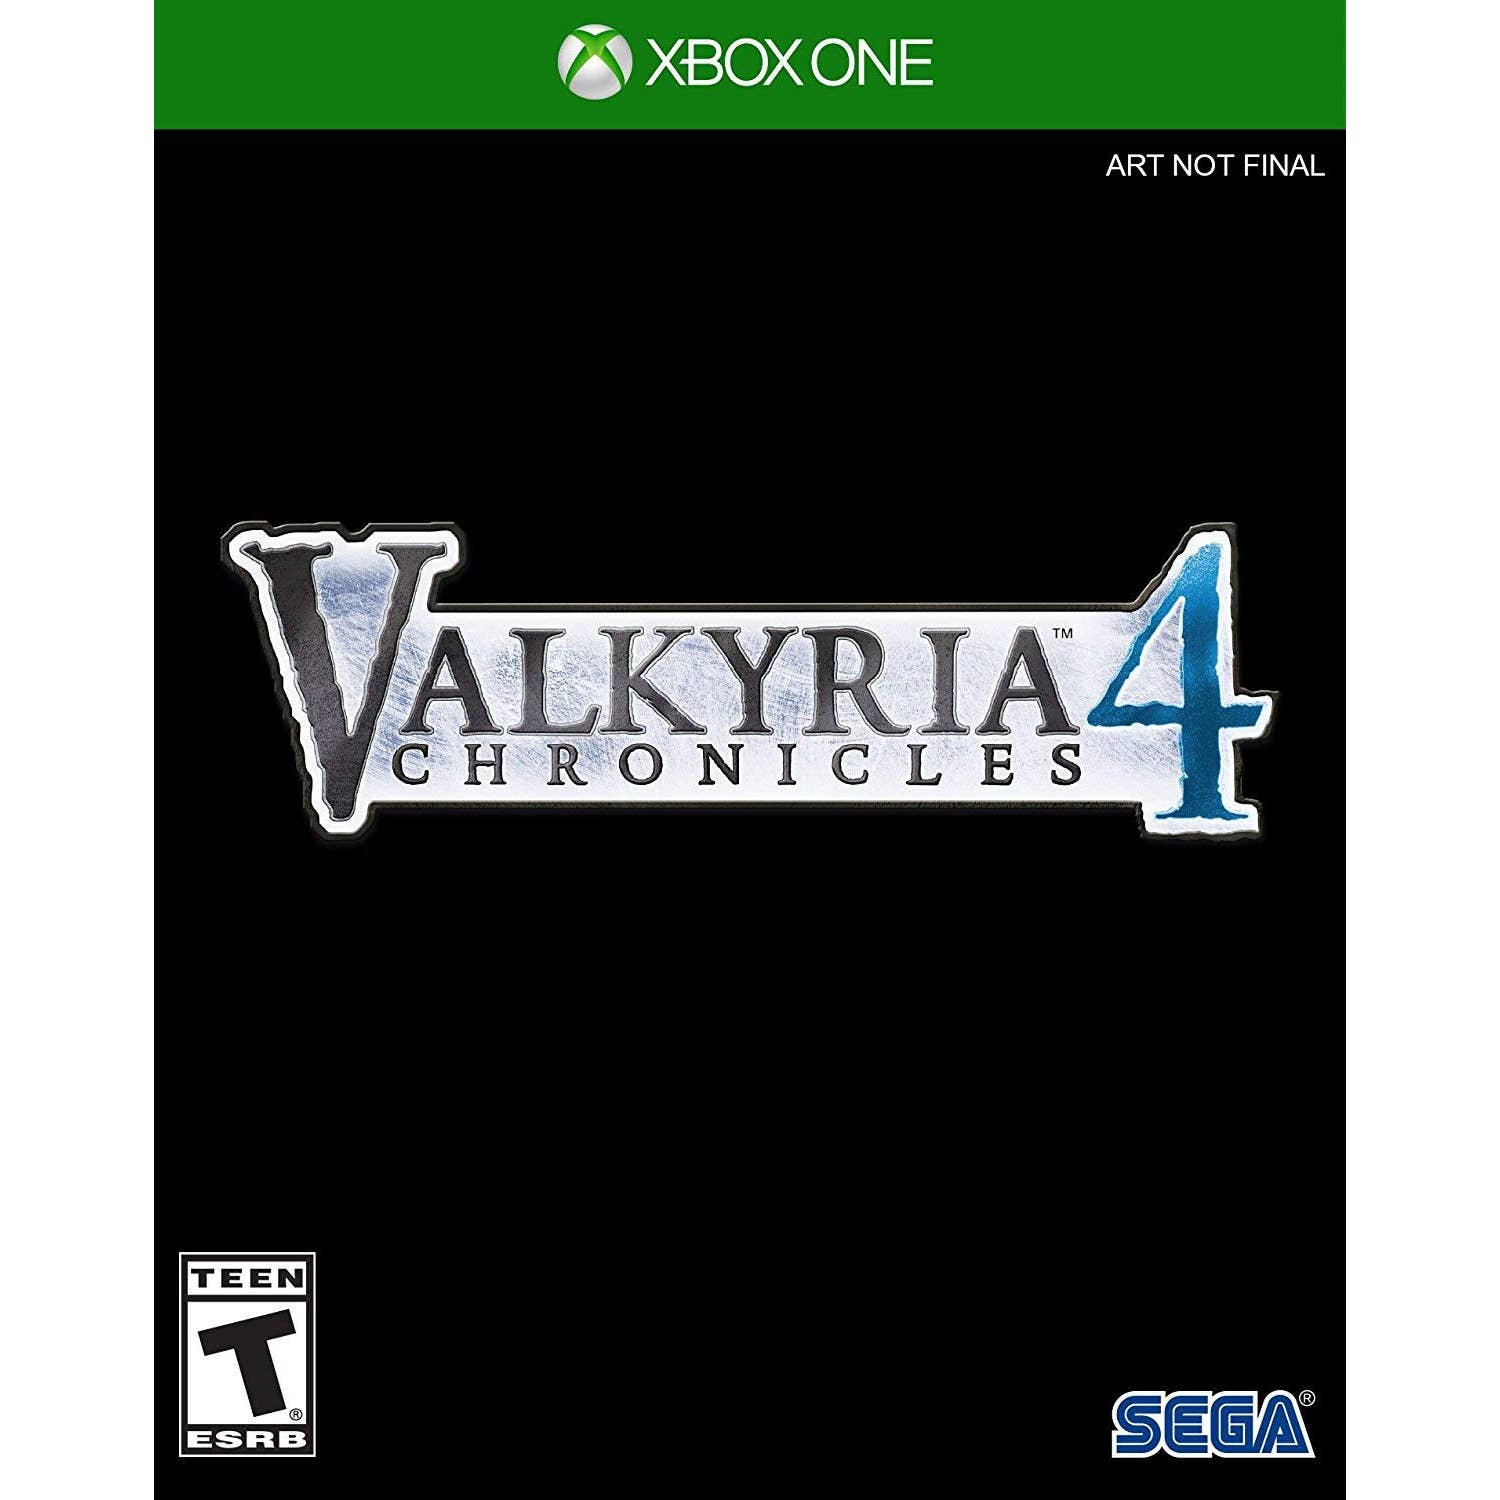 SEGA - VC-64084-7 Valkyria Chronicles 4: Launch Edition - Xbox One